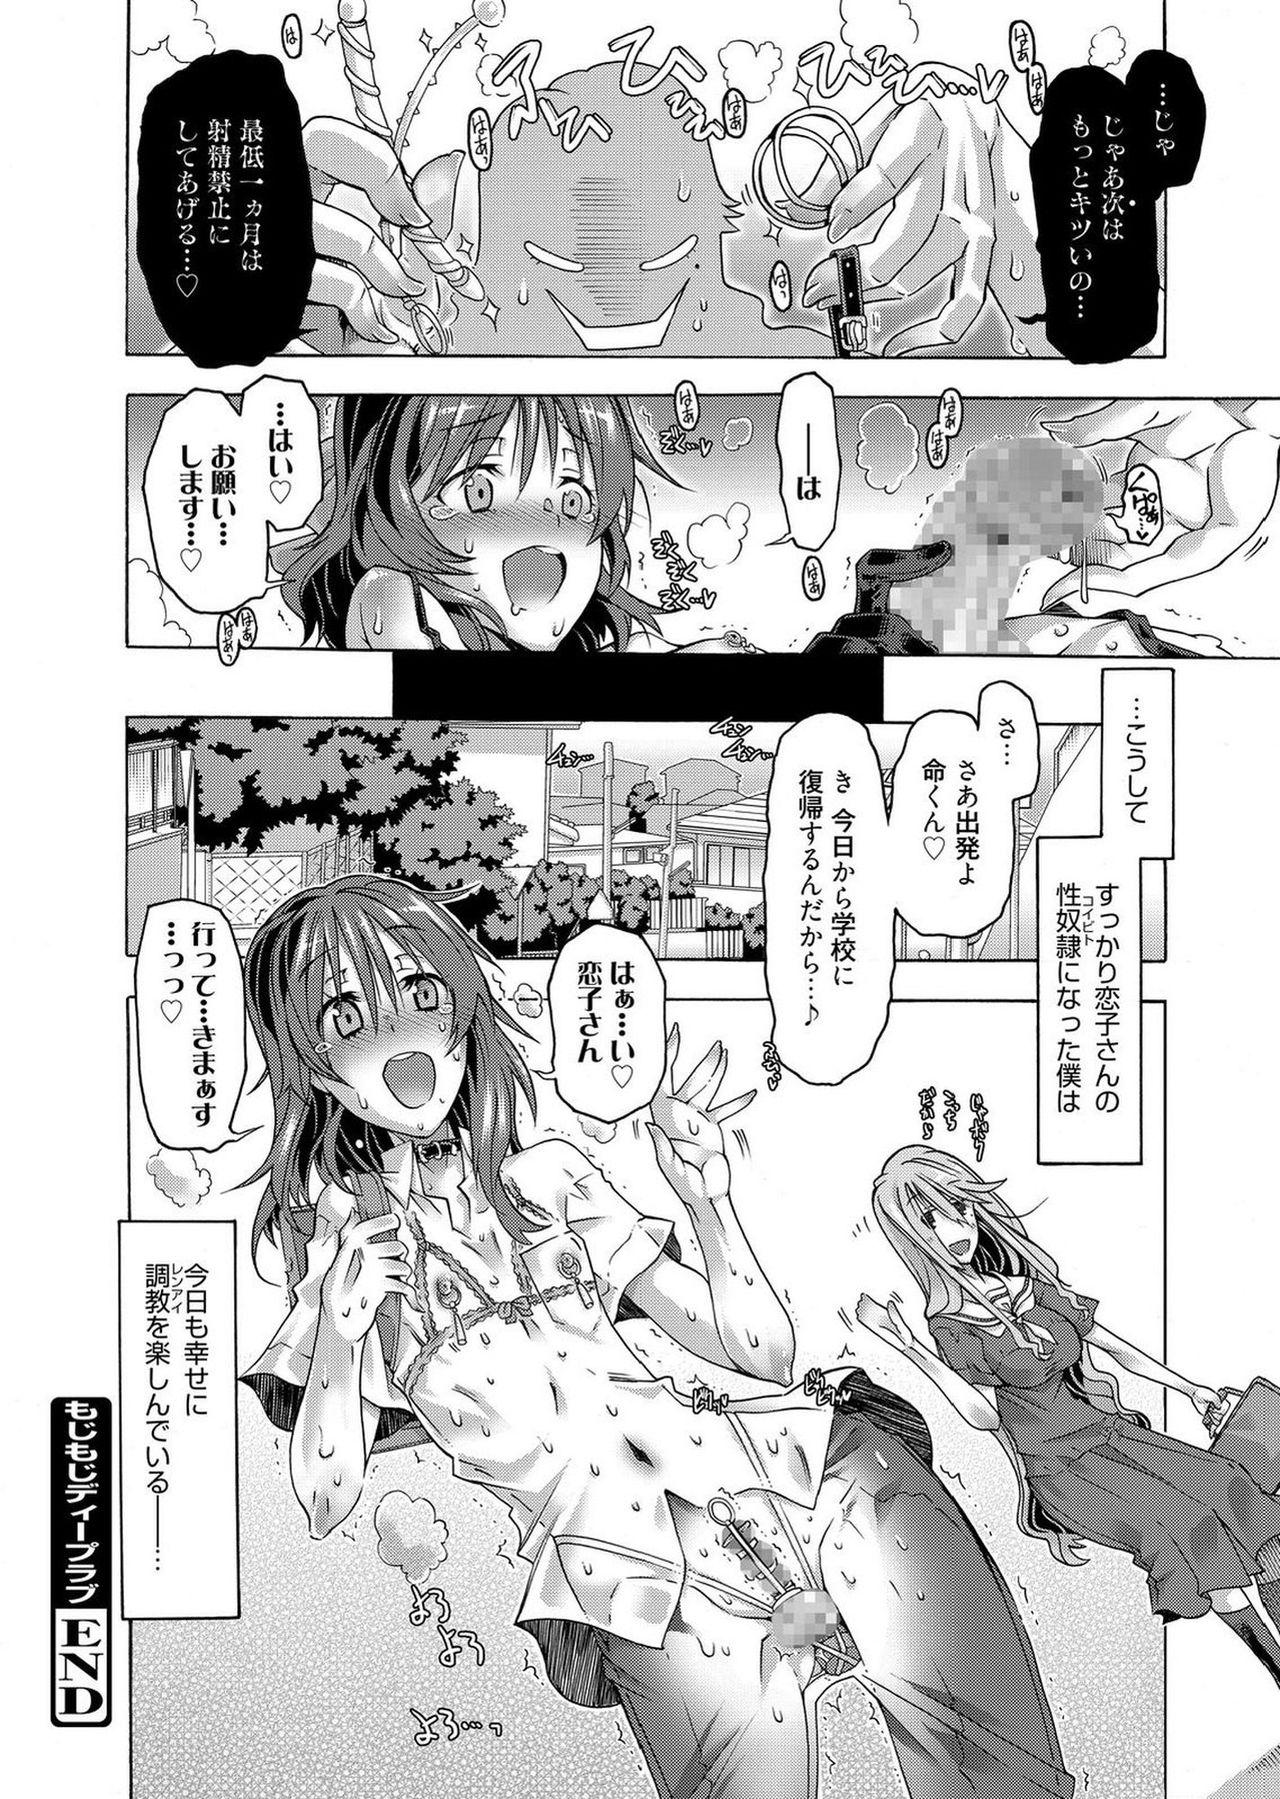 Web Manga Bangaichi Vol. 1 22